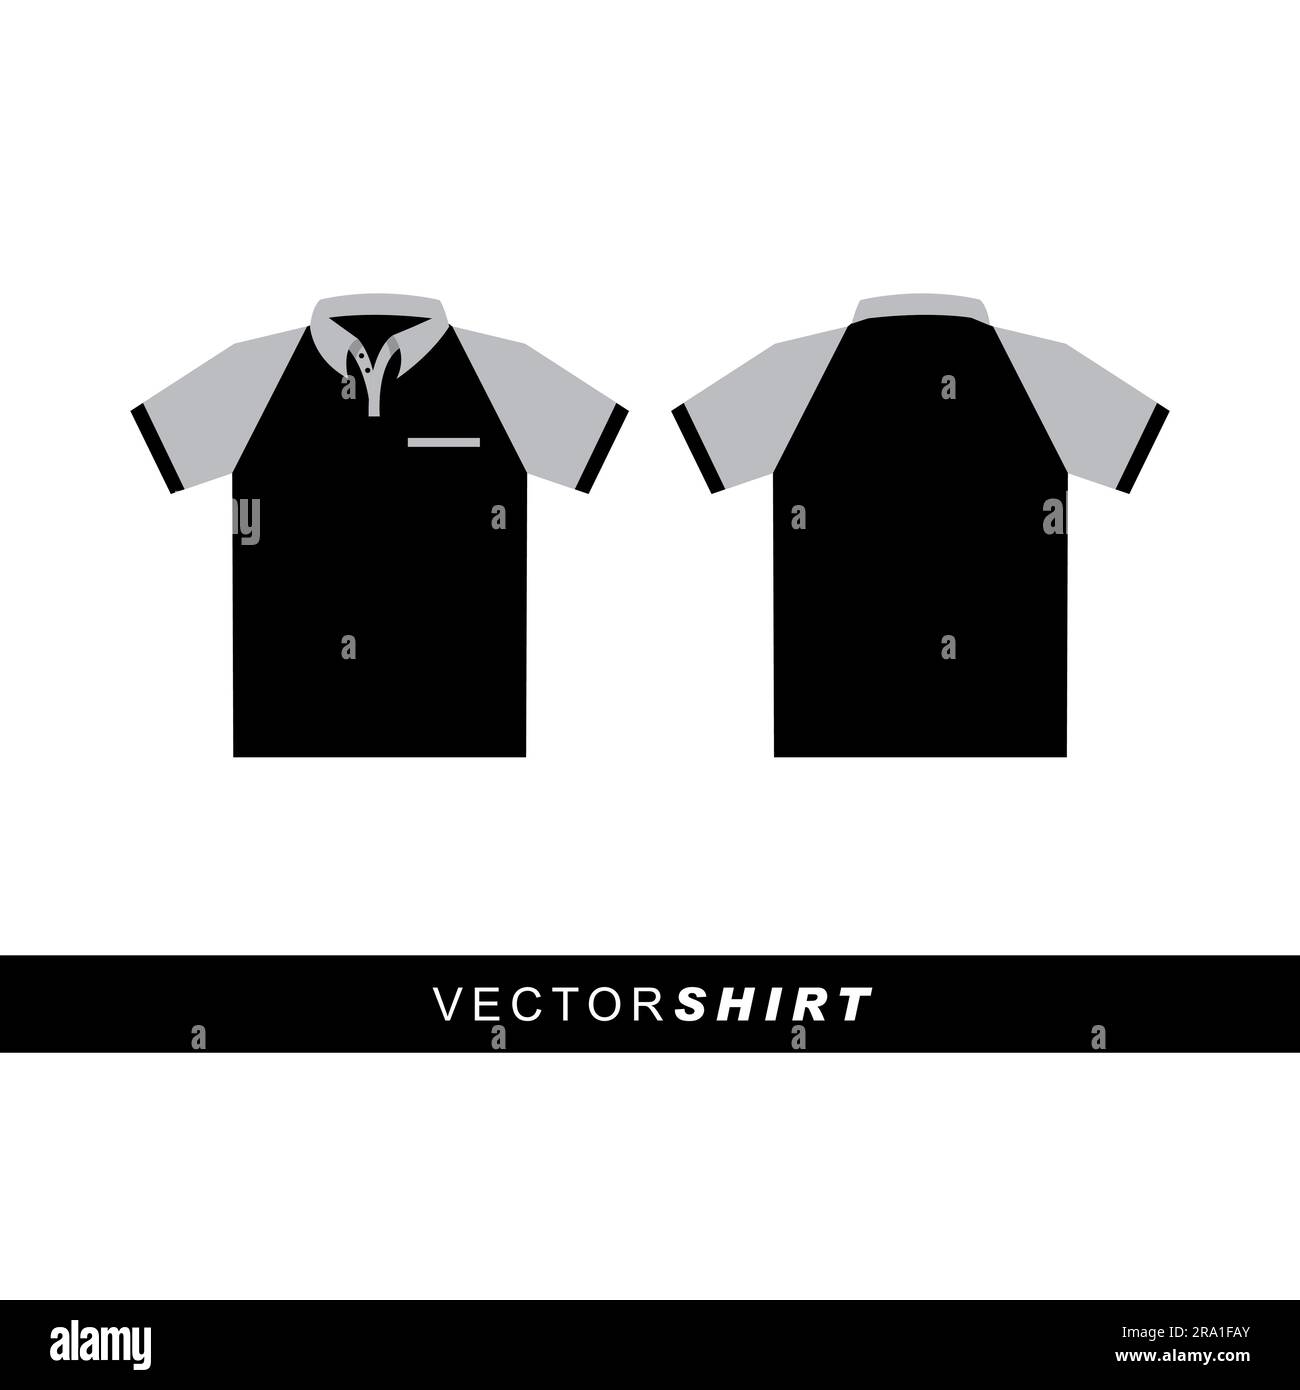 Vector Shirt Template. Blank Tshirt Vector Illustration Stock Vector